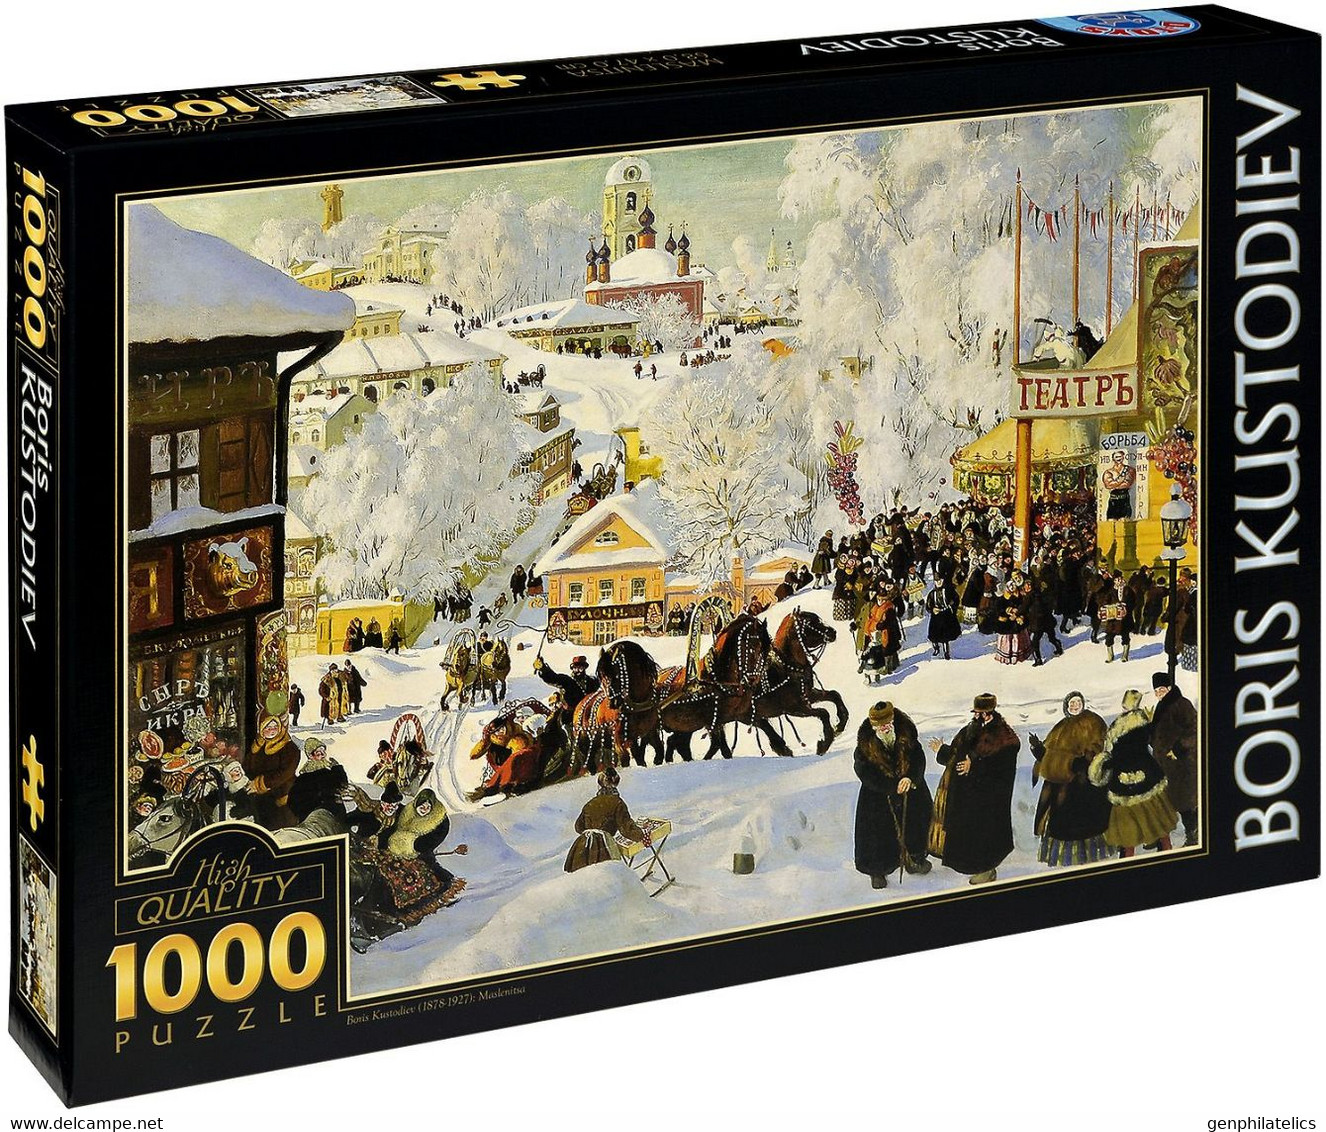 NEW D-Toys Jigsaw Puzzle 1000 Pieces Tiles Boris Kustodiev "Maslenitsa" - Puzzle Games